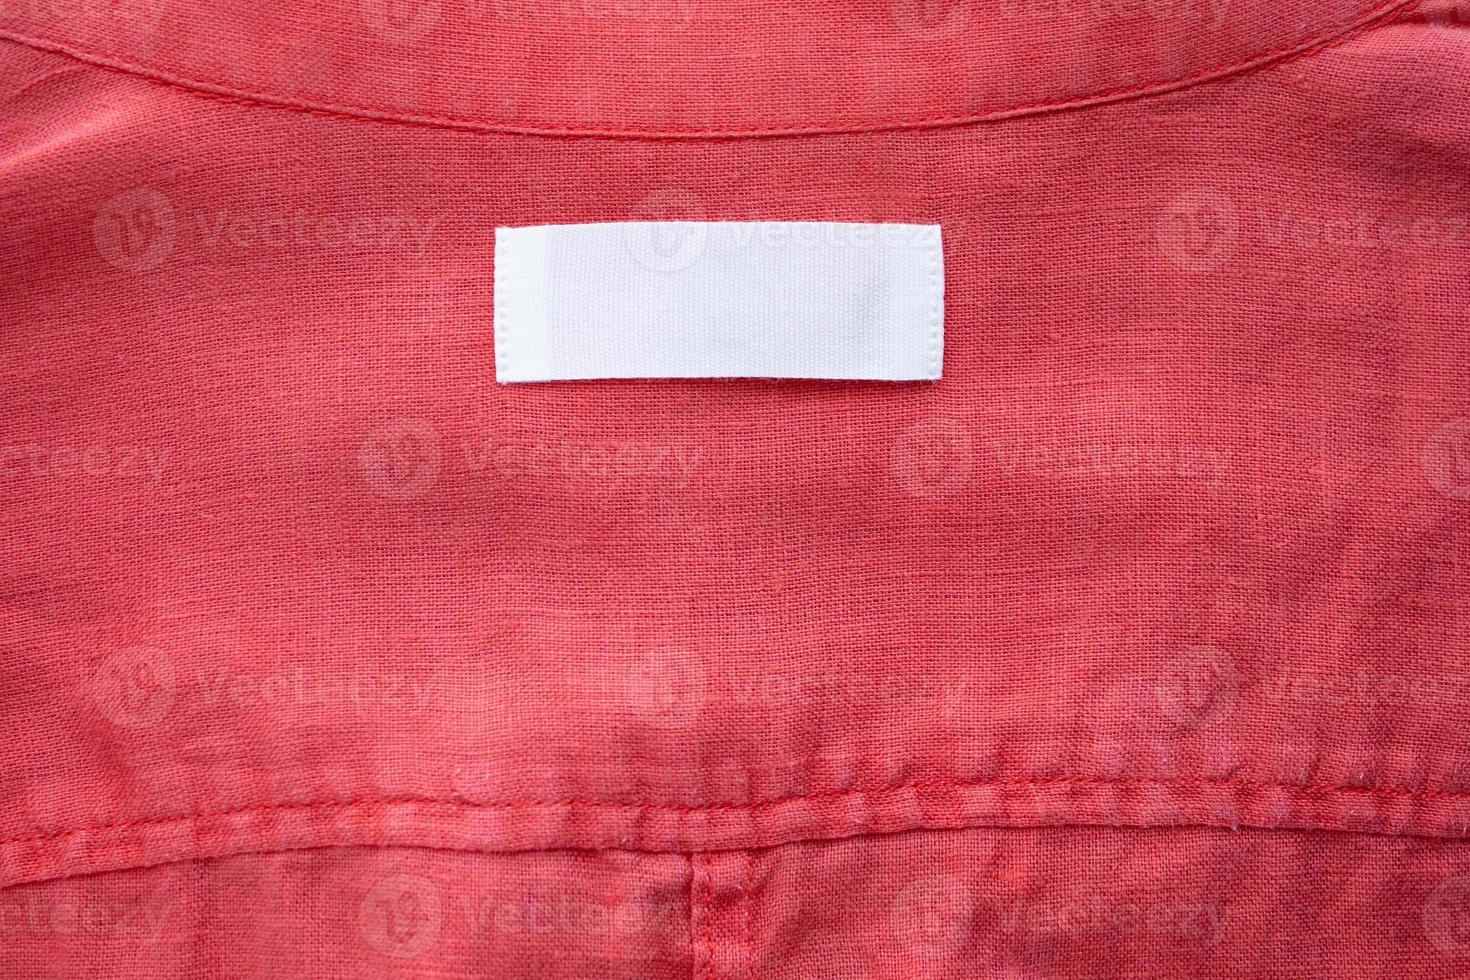 wit blanco kleding label etiket Aan rood linnen overhemd kleding stof structuur achtergrond foto